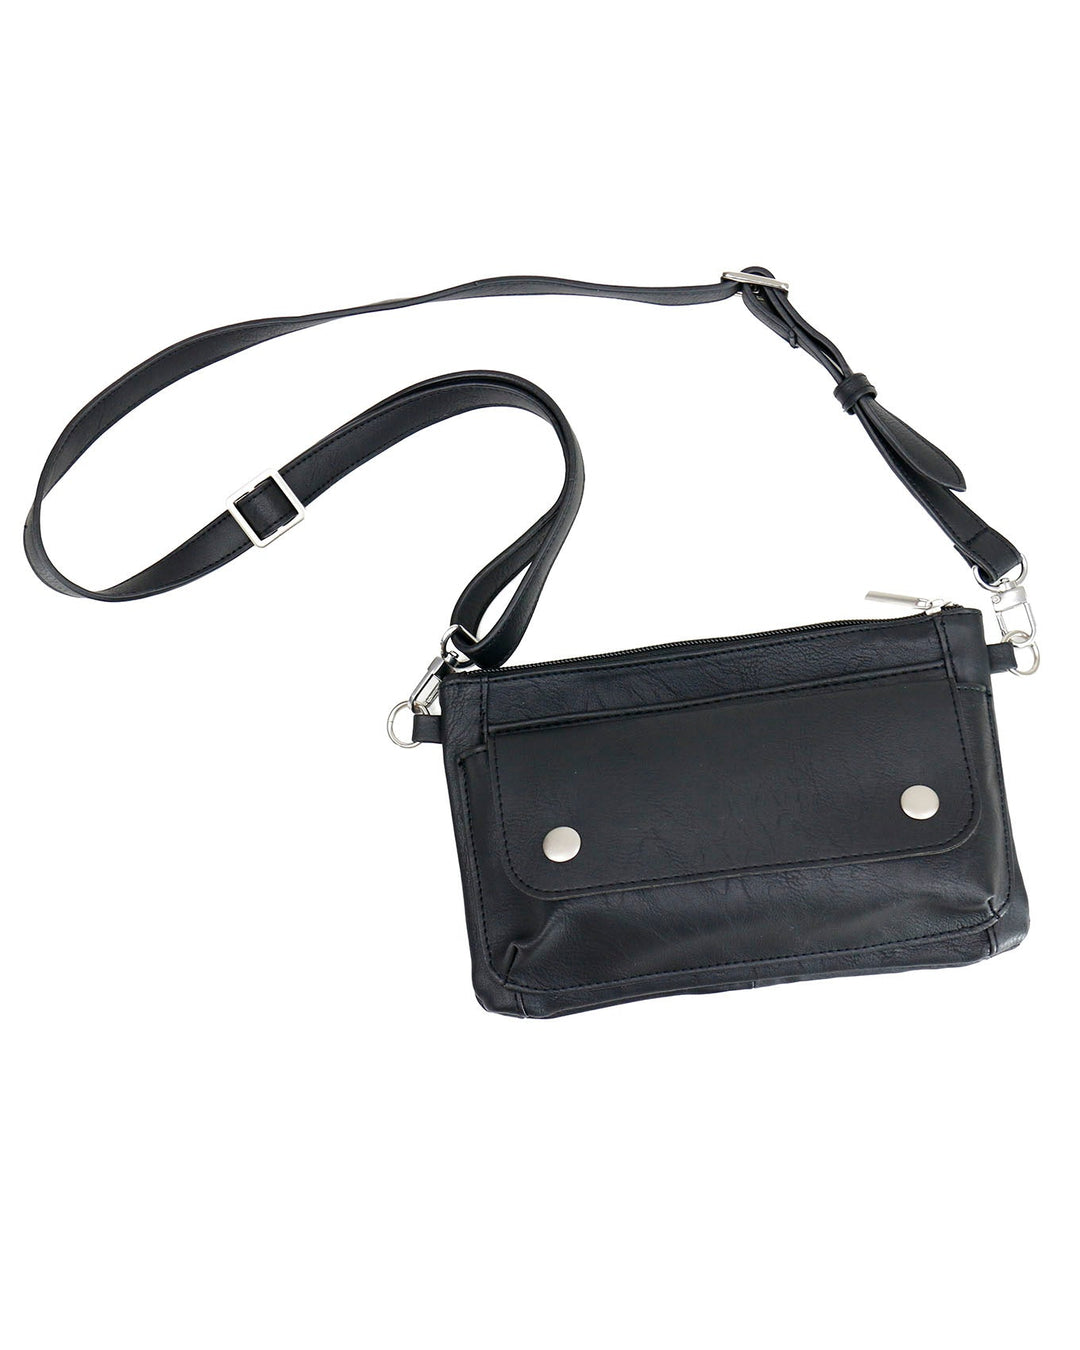 Vegan Leather Essentials Belt Bag in Black by Grace & Lace